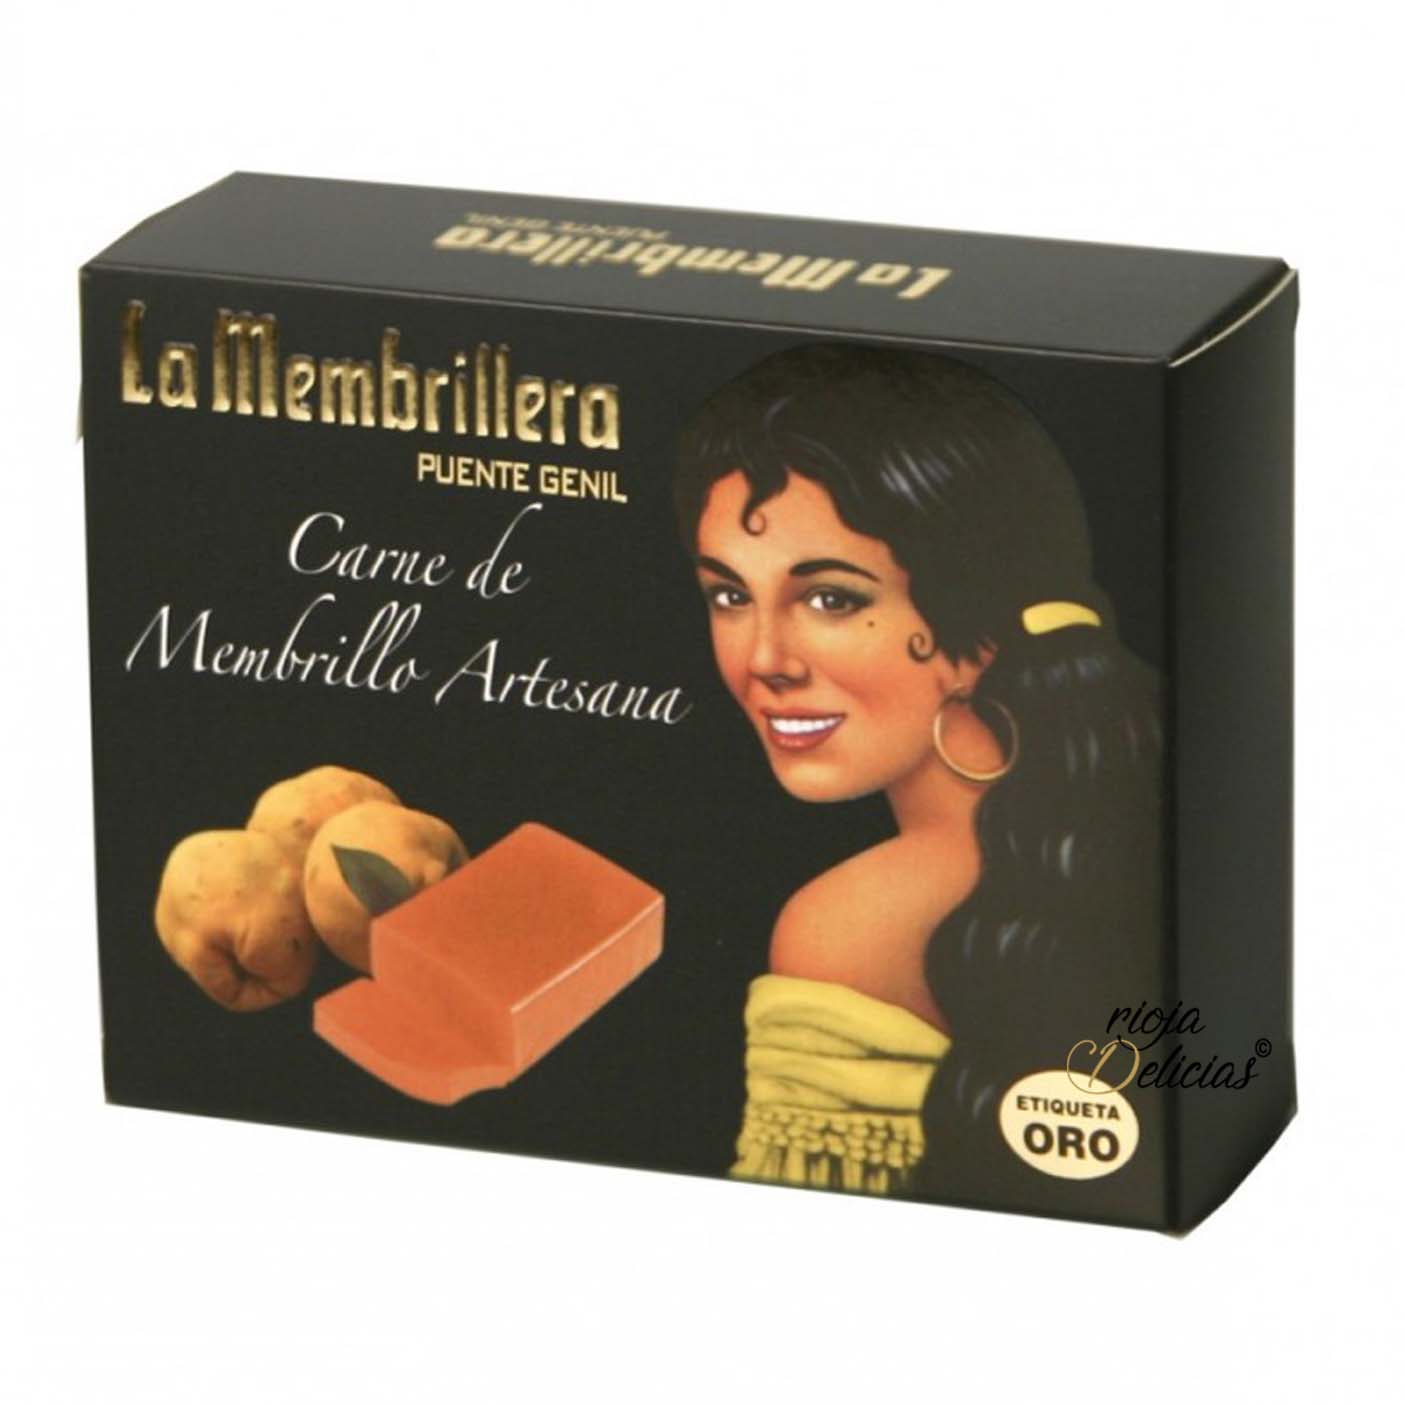 Caja producto de muestra Carne de membrillo artesano etiqueta de oro La Rioja